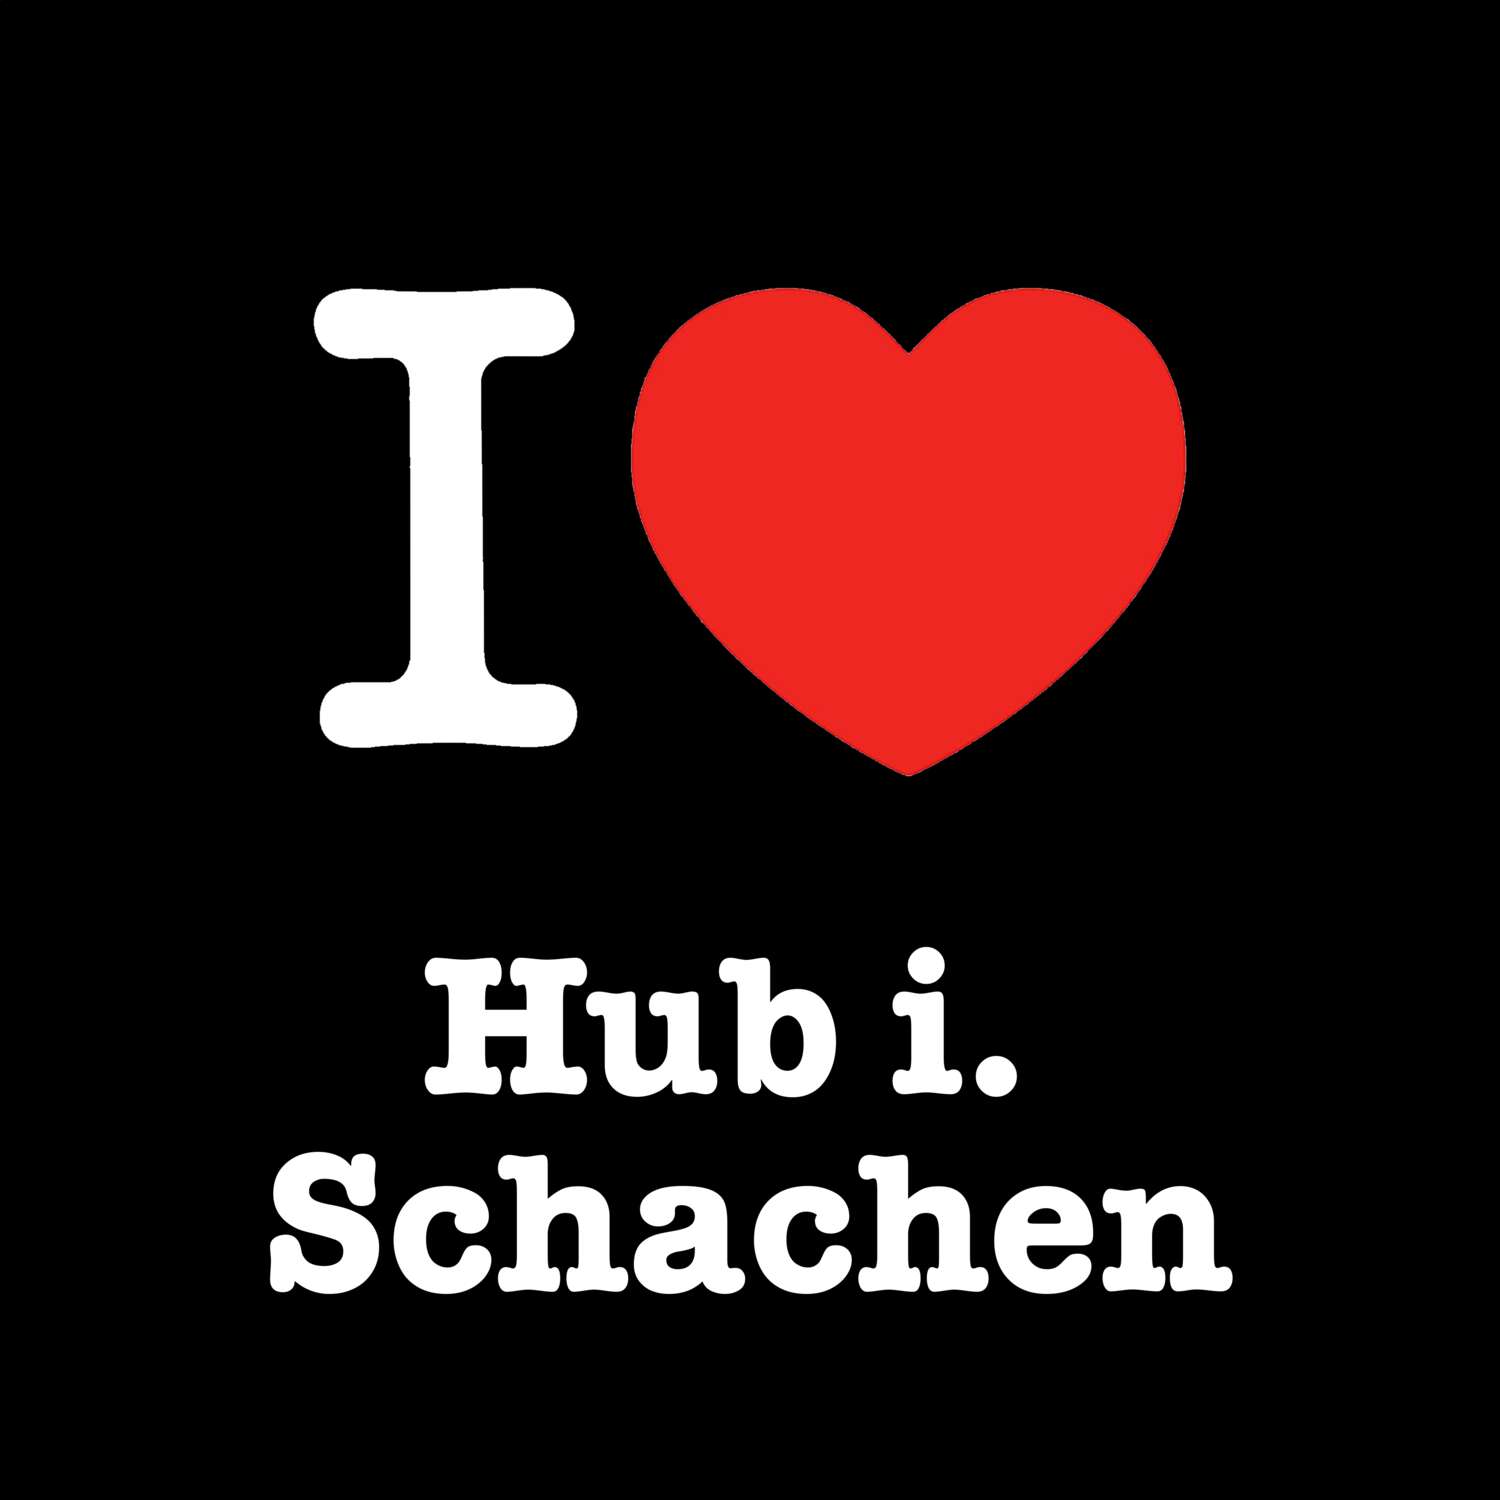 Hub i. Schachen T-Shirt »I love«